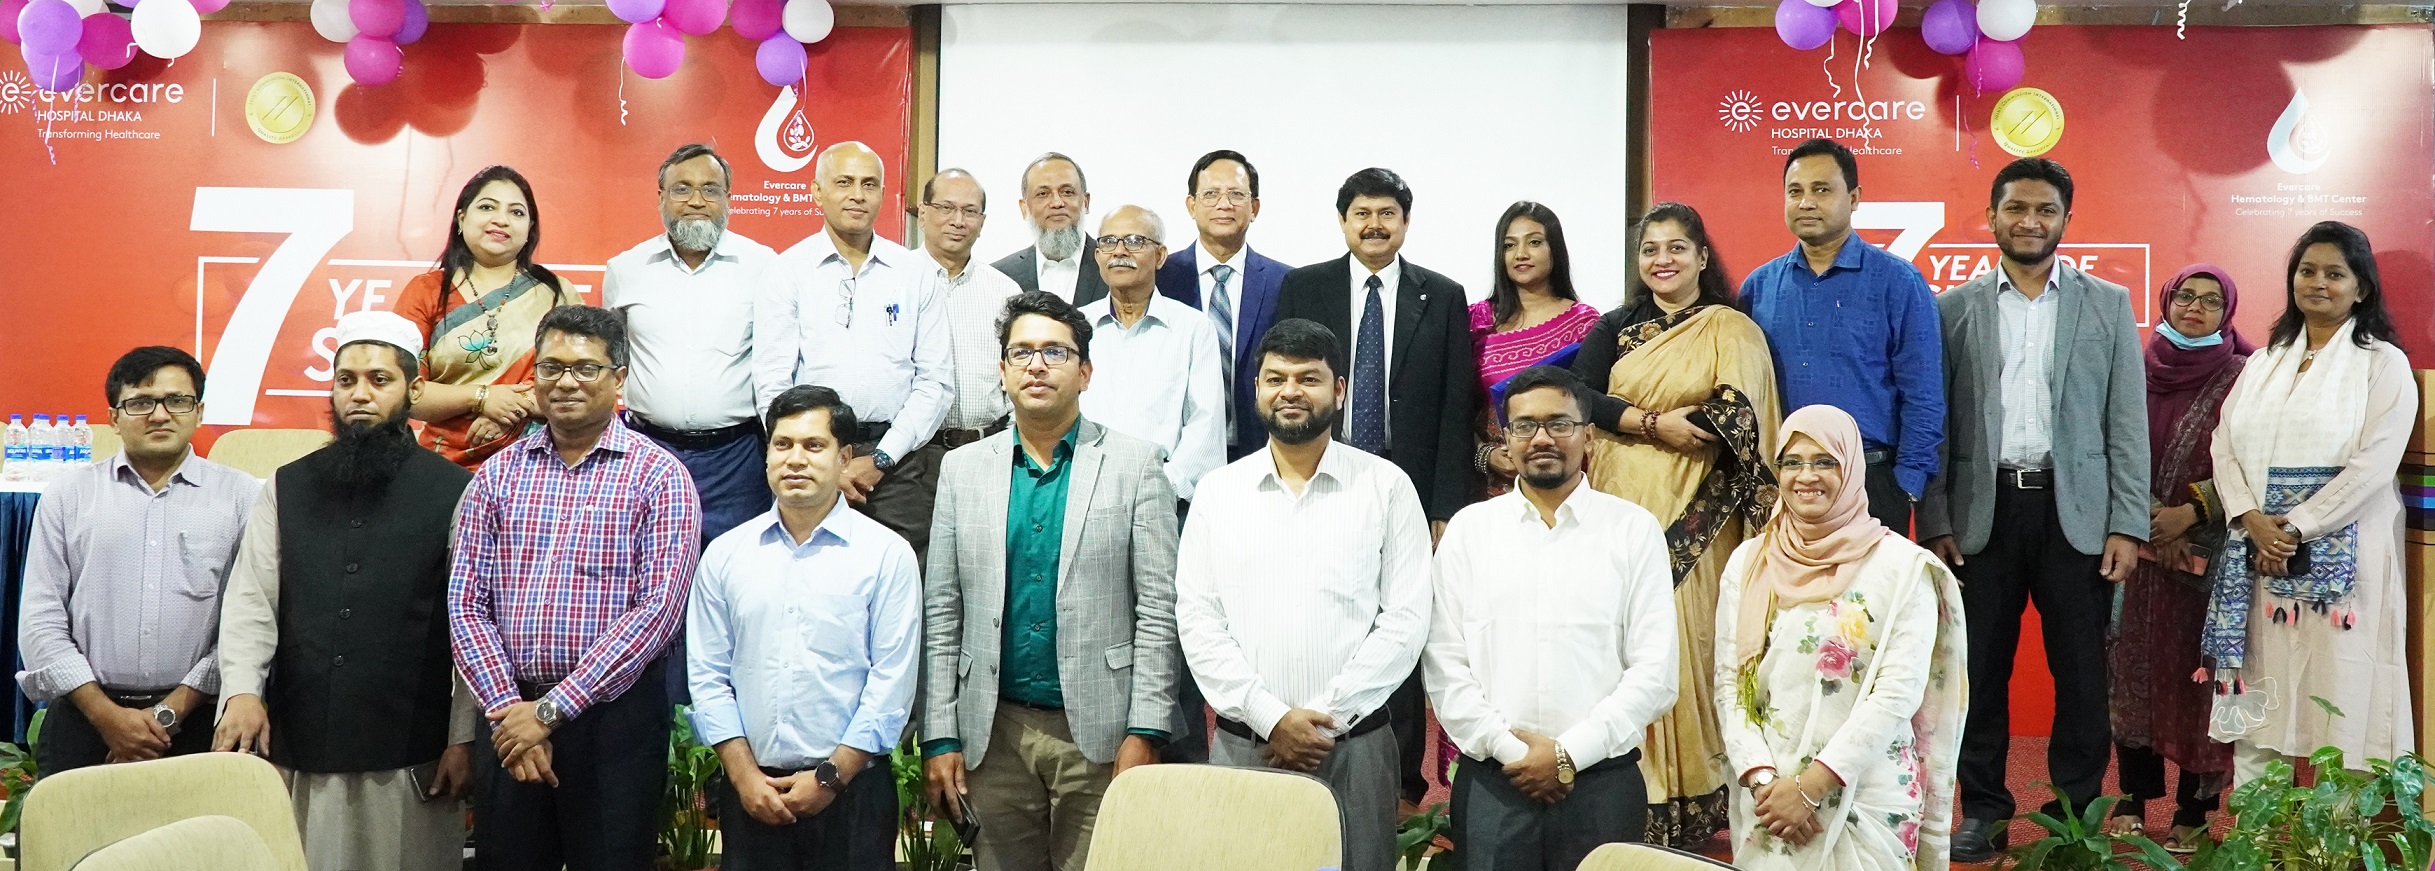 Evercare Hospital Dhaka Hematology Department's 7th Anniversary